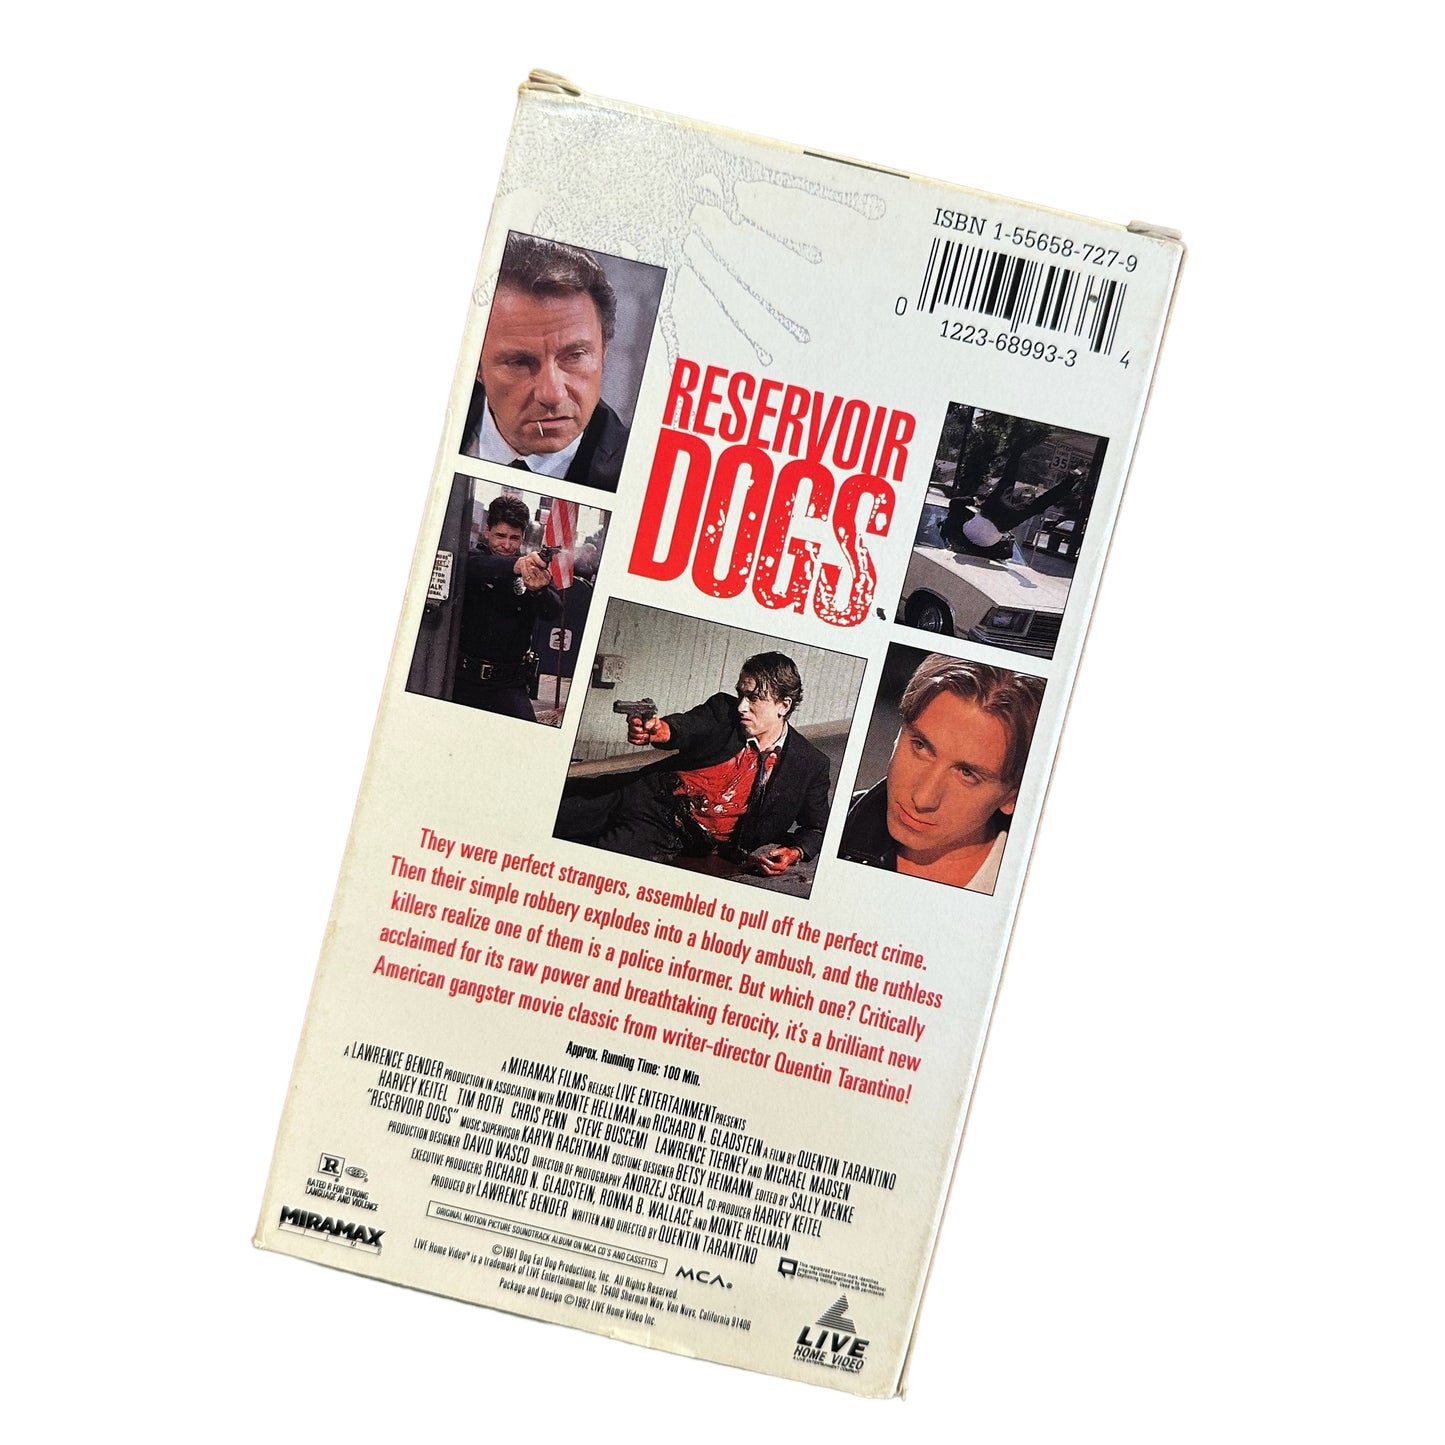 VHS ビデオテープ 輸入版 レザボア・ドッグス Reservoir Dogs 海外版 USA アメリカ ヴィンテージ ビデオ 紙ジャケ